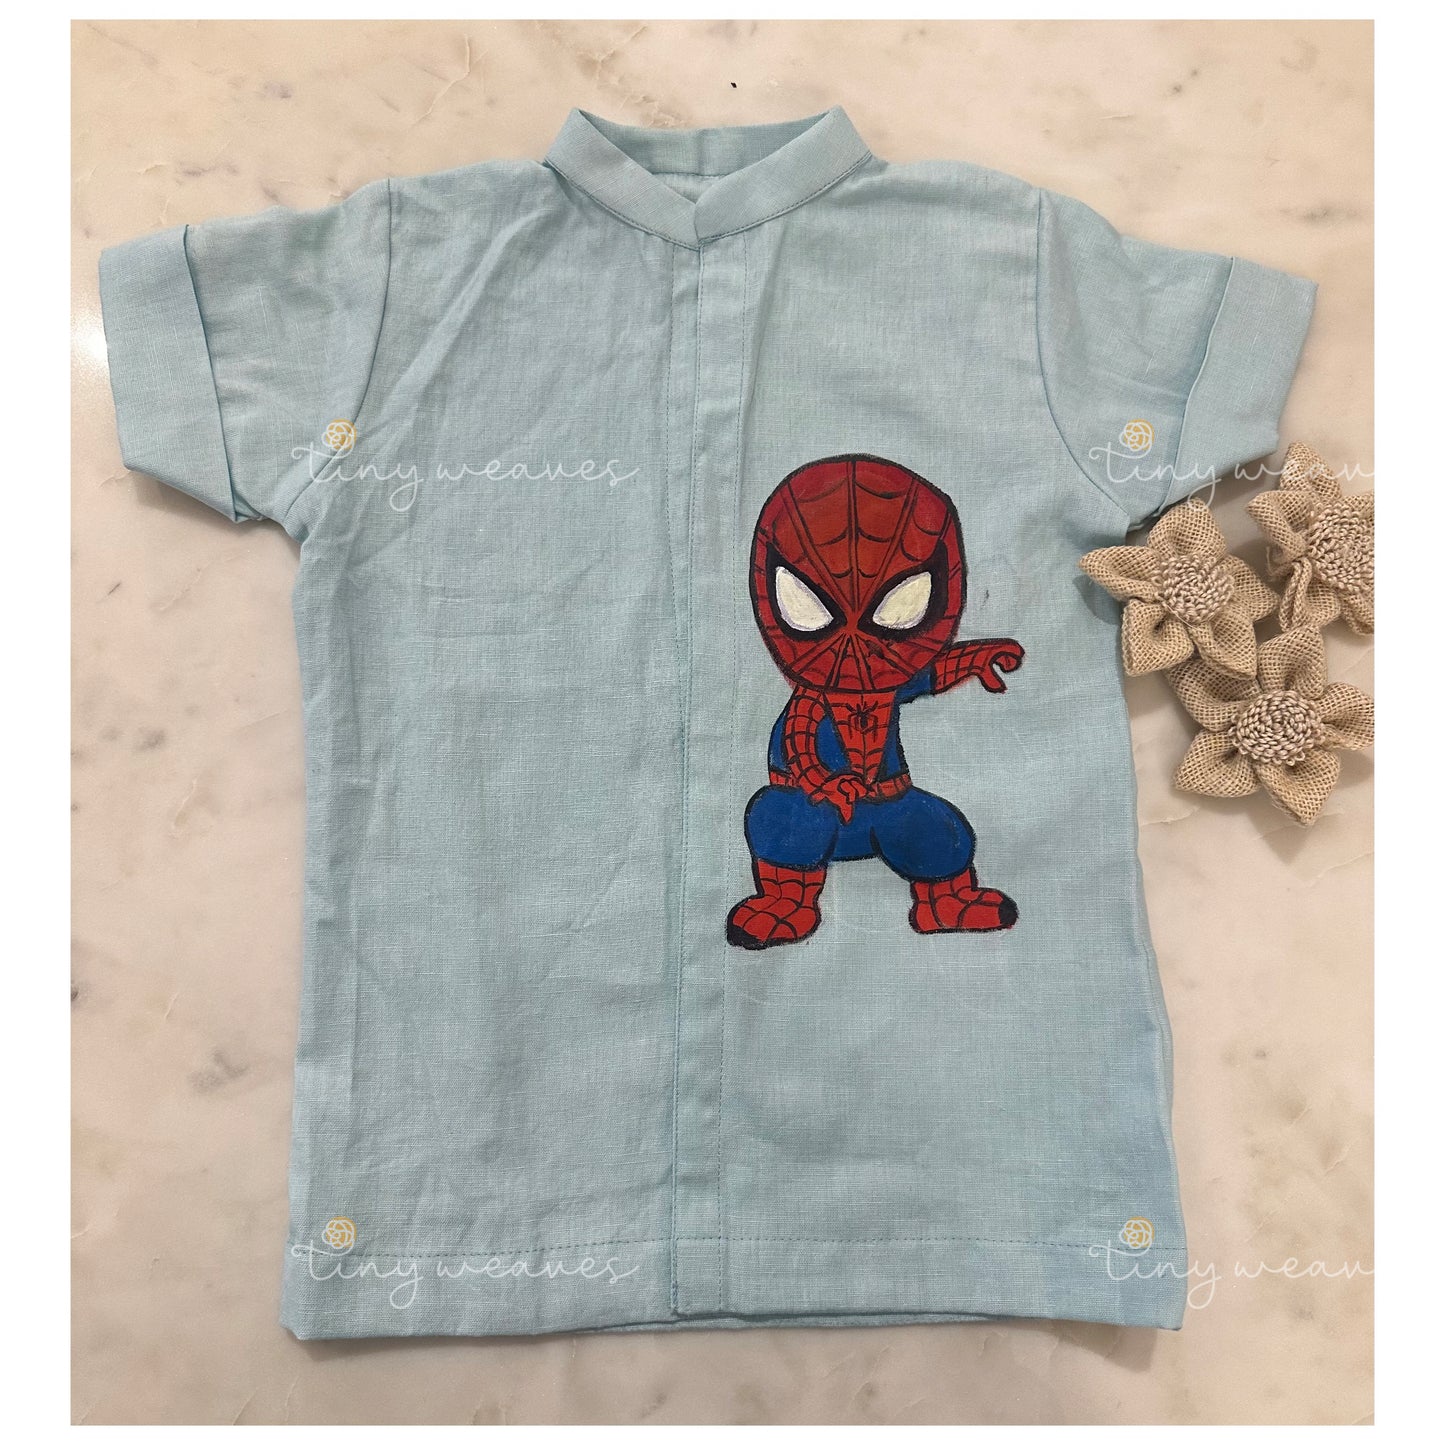 Spider man shirt